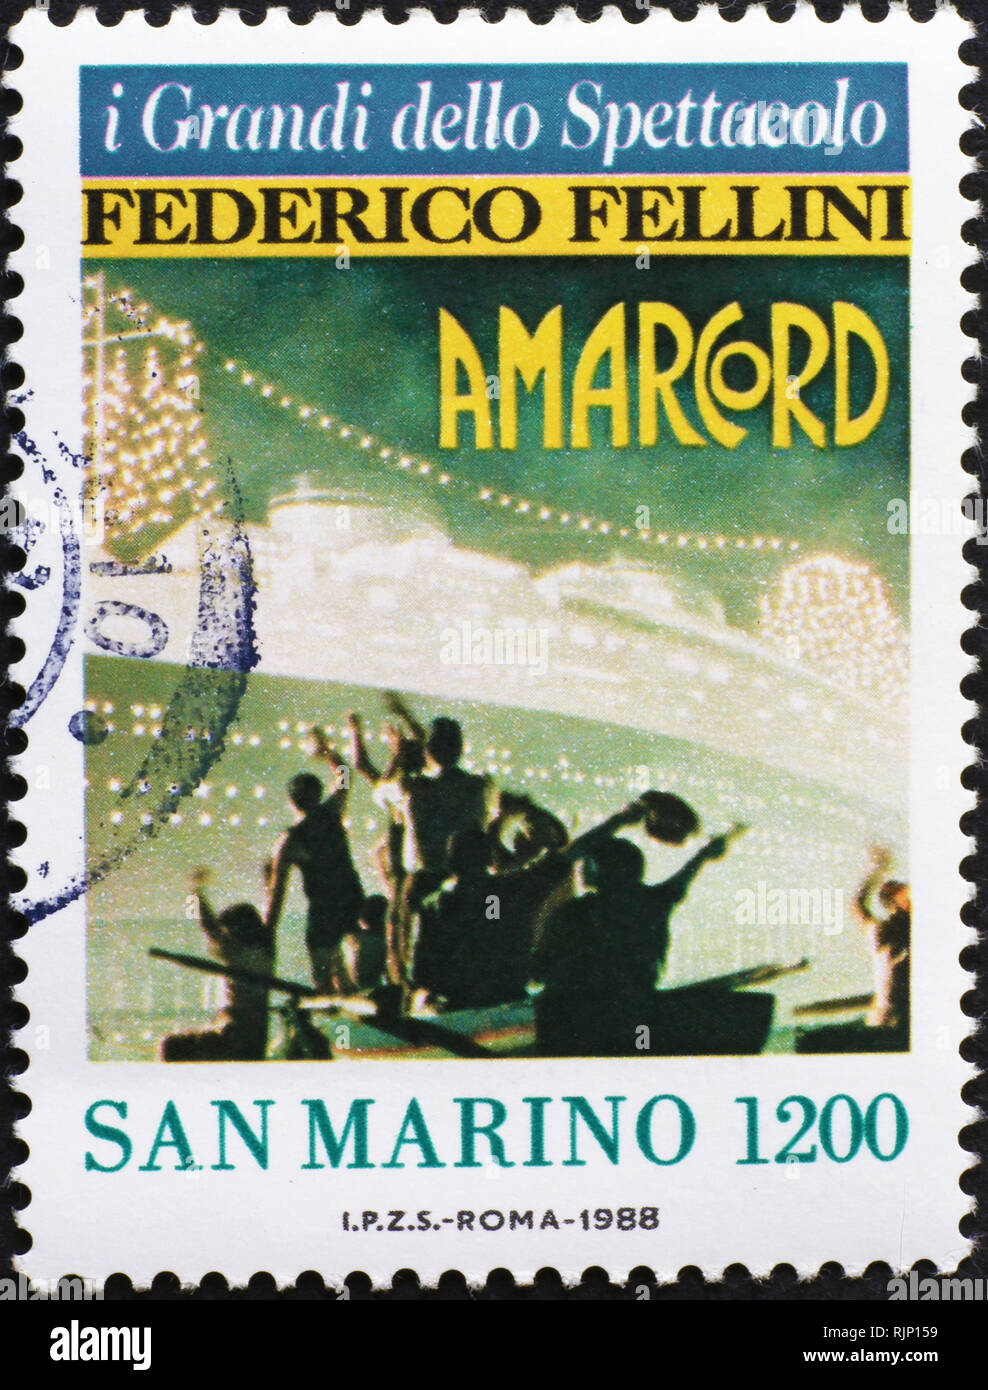 Póster de película Amarcord de Fellini en la estampilla postal Foto de stock